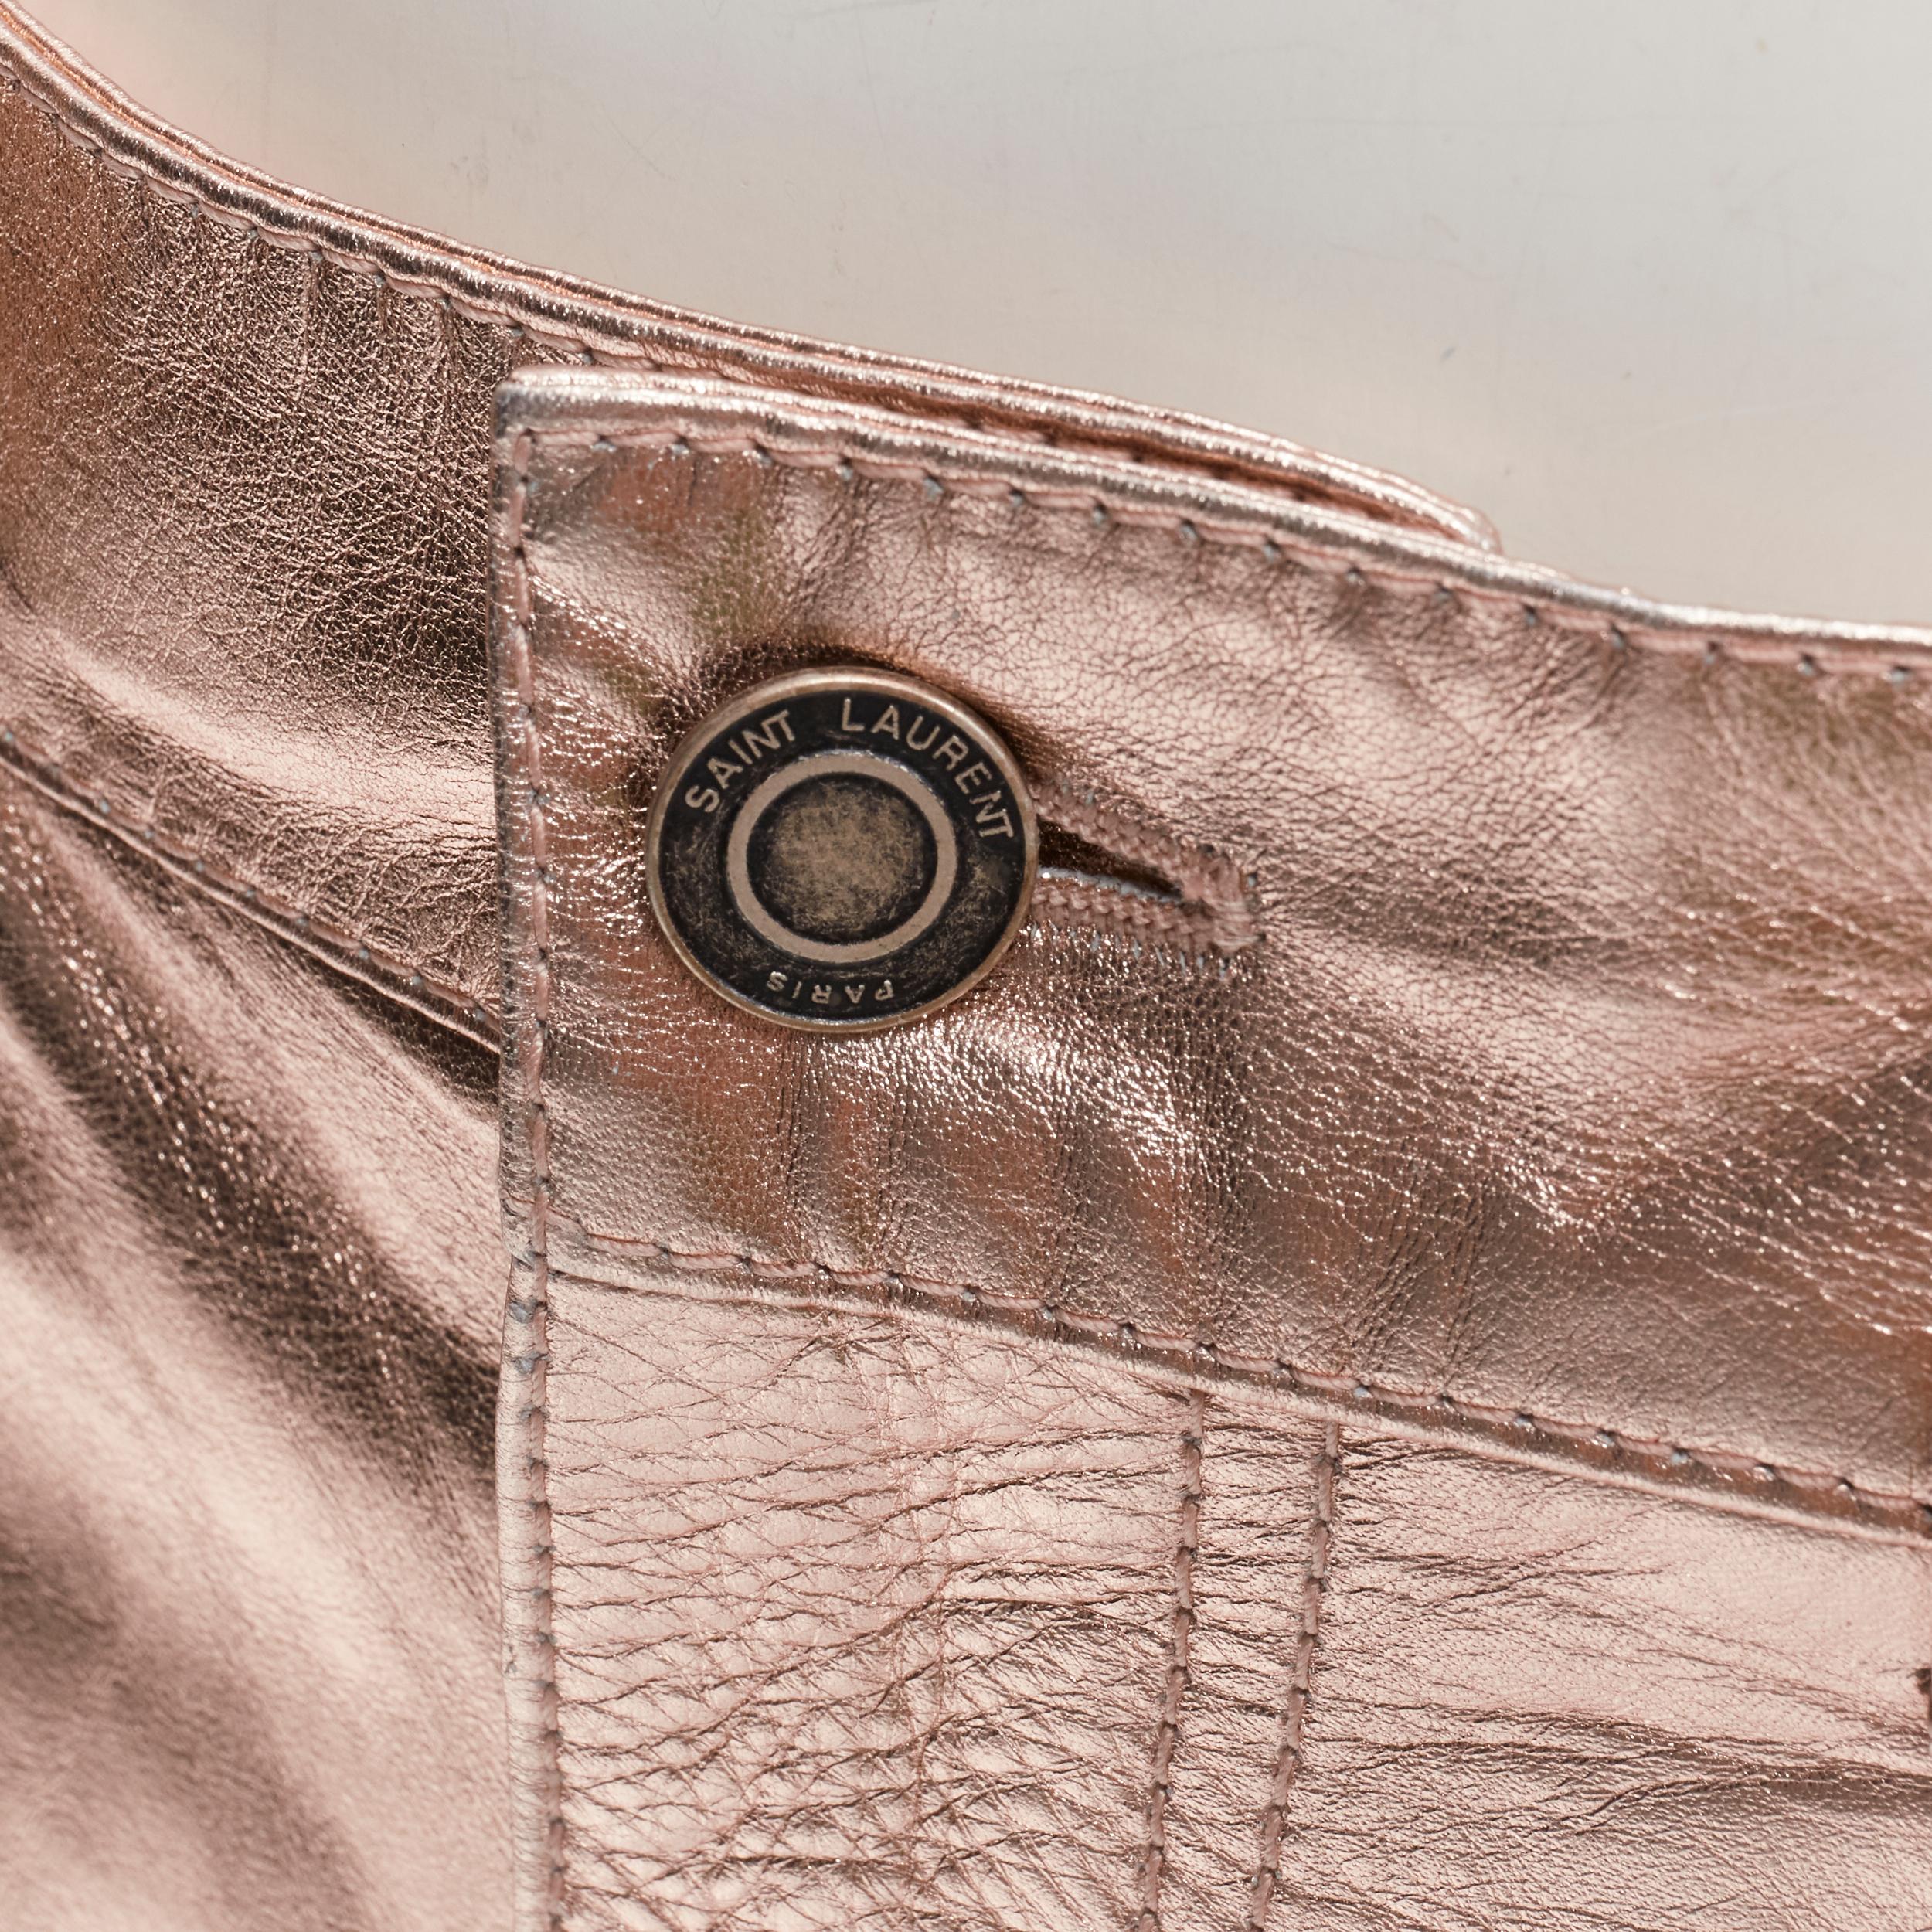 SAINT LAURENT 2022 metallic copper genuine leather mini skirt FR36 S
Brand: Saint Laurent
Designer: Anthony Vaccarello
Material: Leather
Color: Bronze
Pattern: Solid
Closure: Zip Fly
Extra Detail: 5-pocket design Antique silver tone hardware. Mini